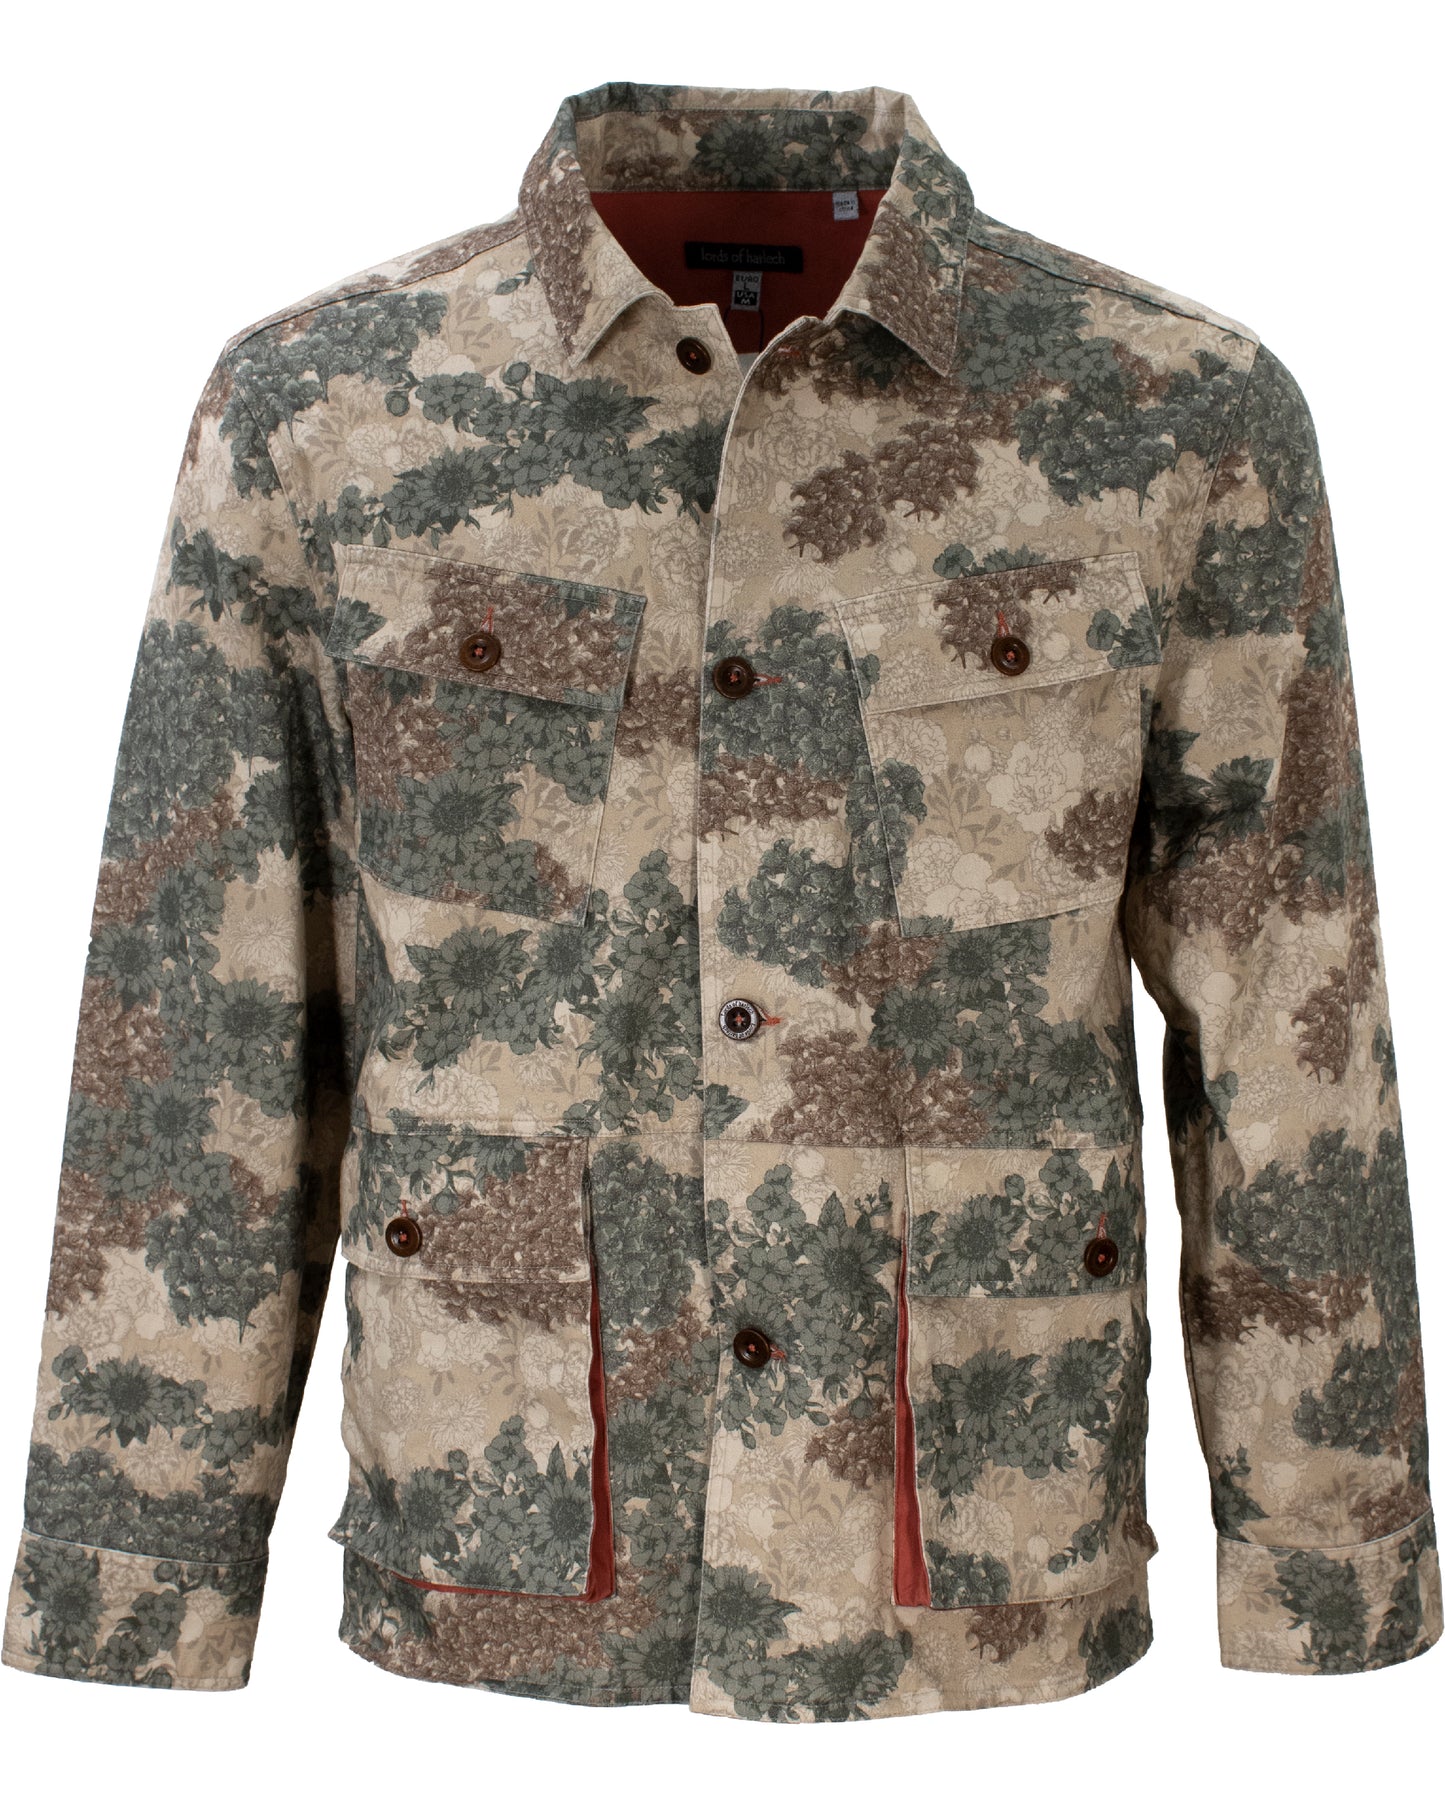 Joe Garden Camo Khaki Military Jacket